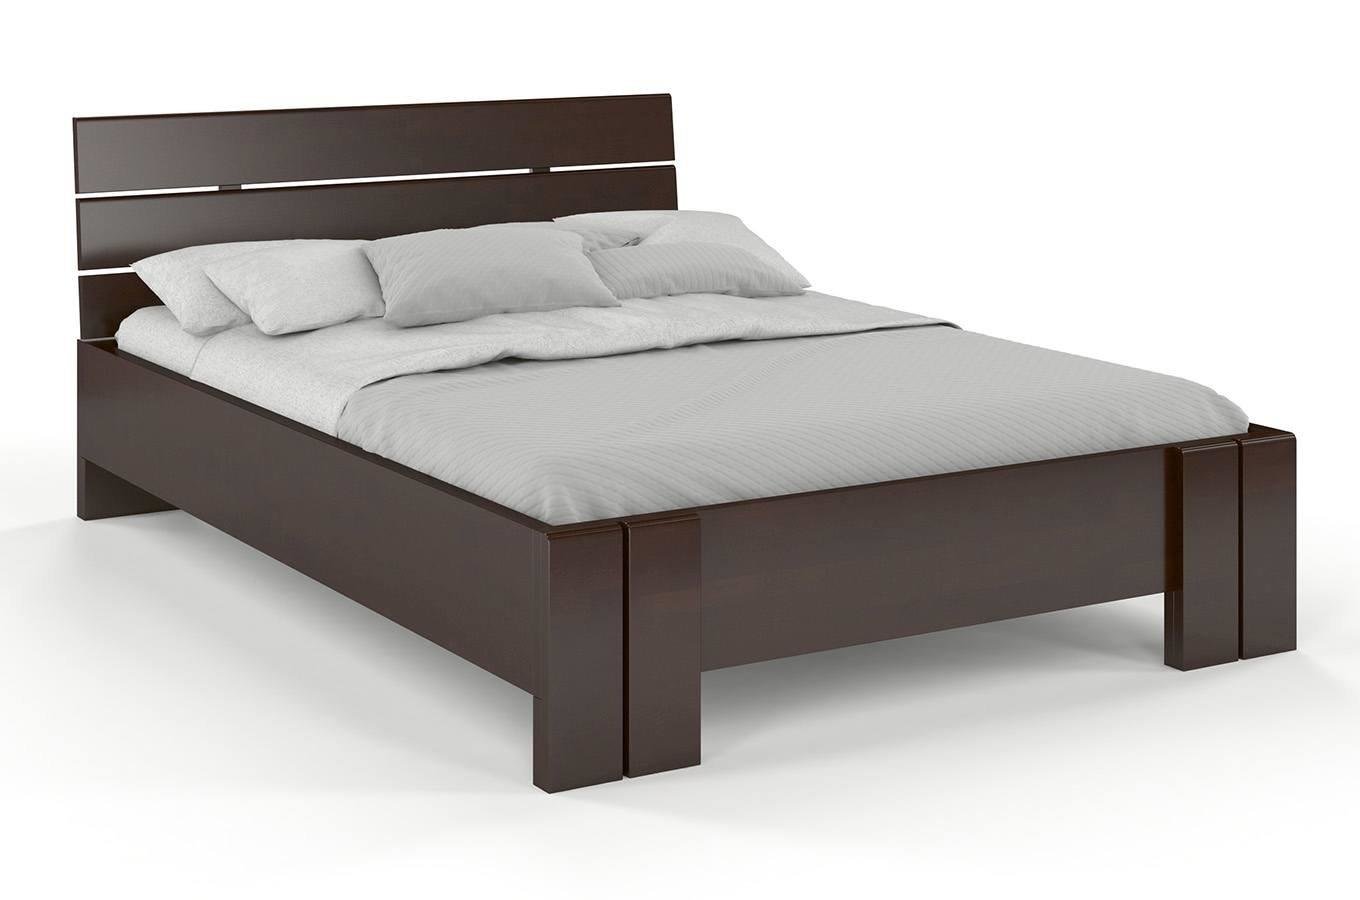 Łóżko drewniane bukowe Visby ARHUS High / 140x200 cm, kolor palisander